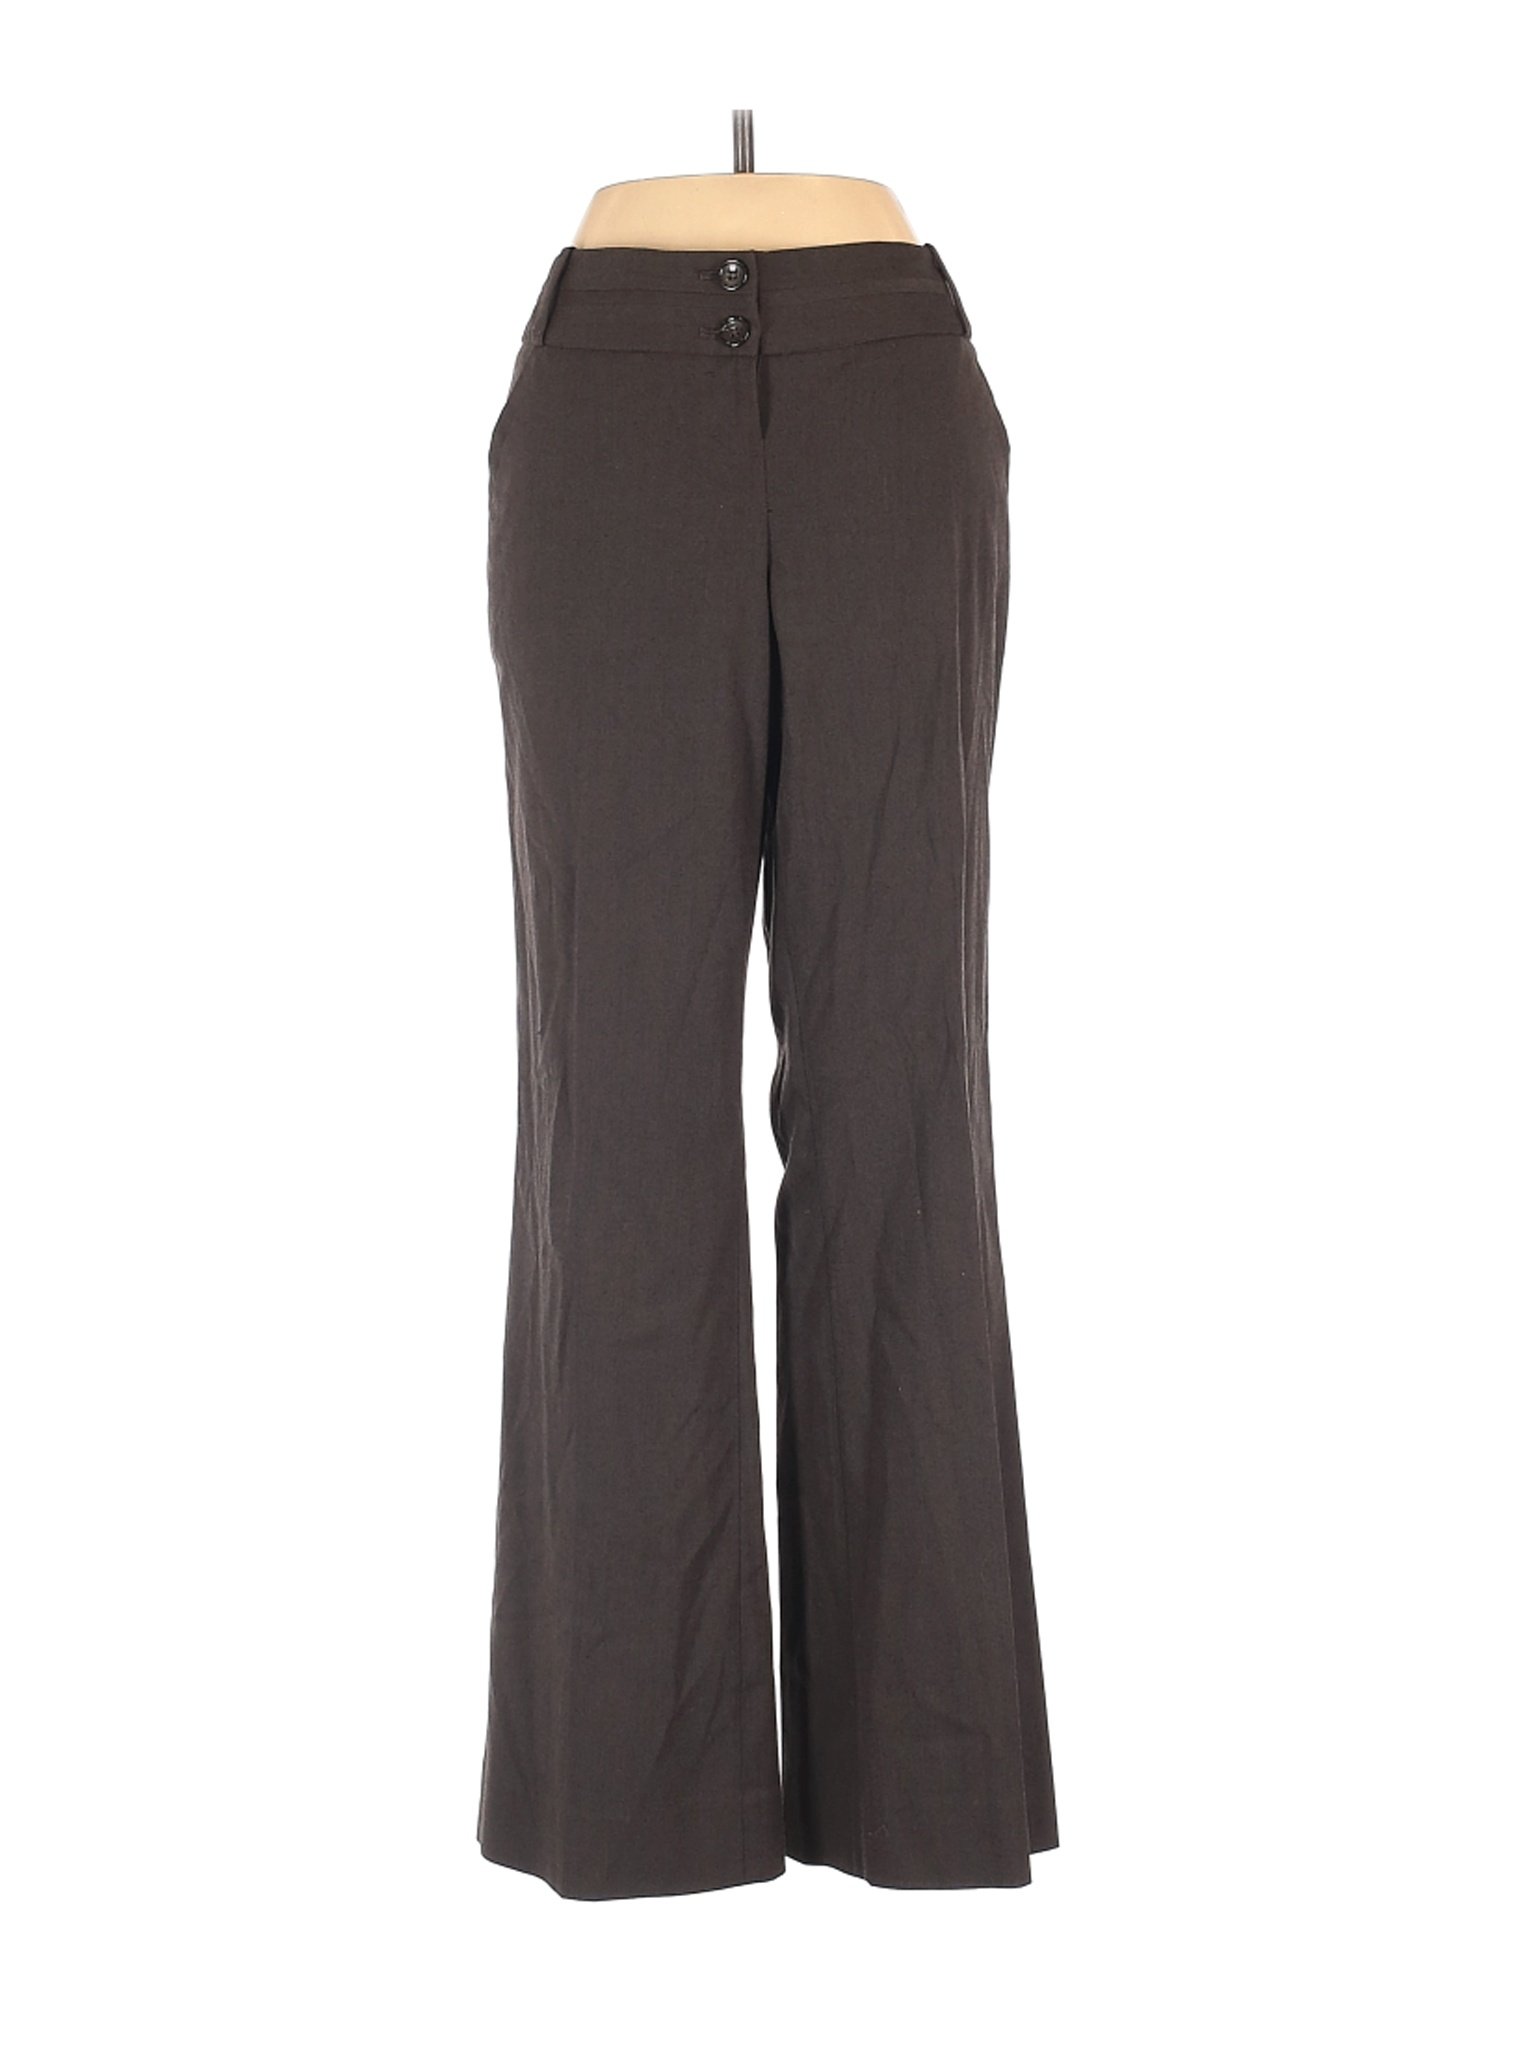 The Limited Women Brown Dress Pants 2 | eBay